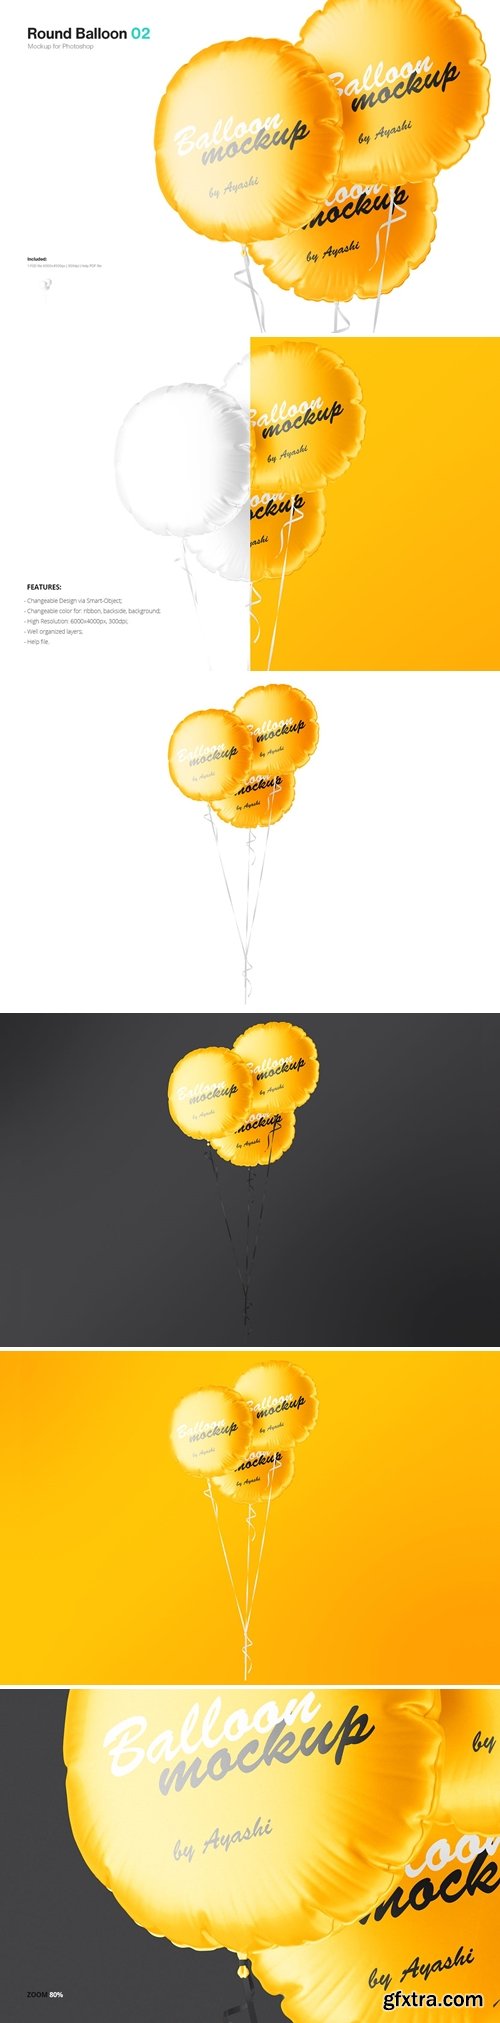 Round Balloons Mockup